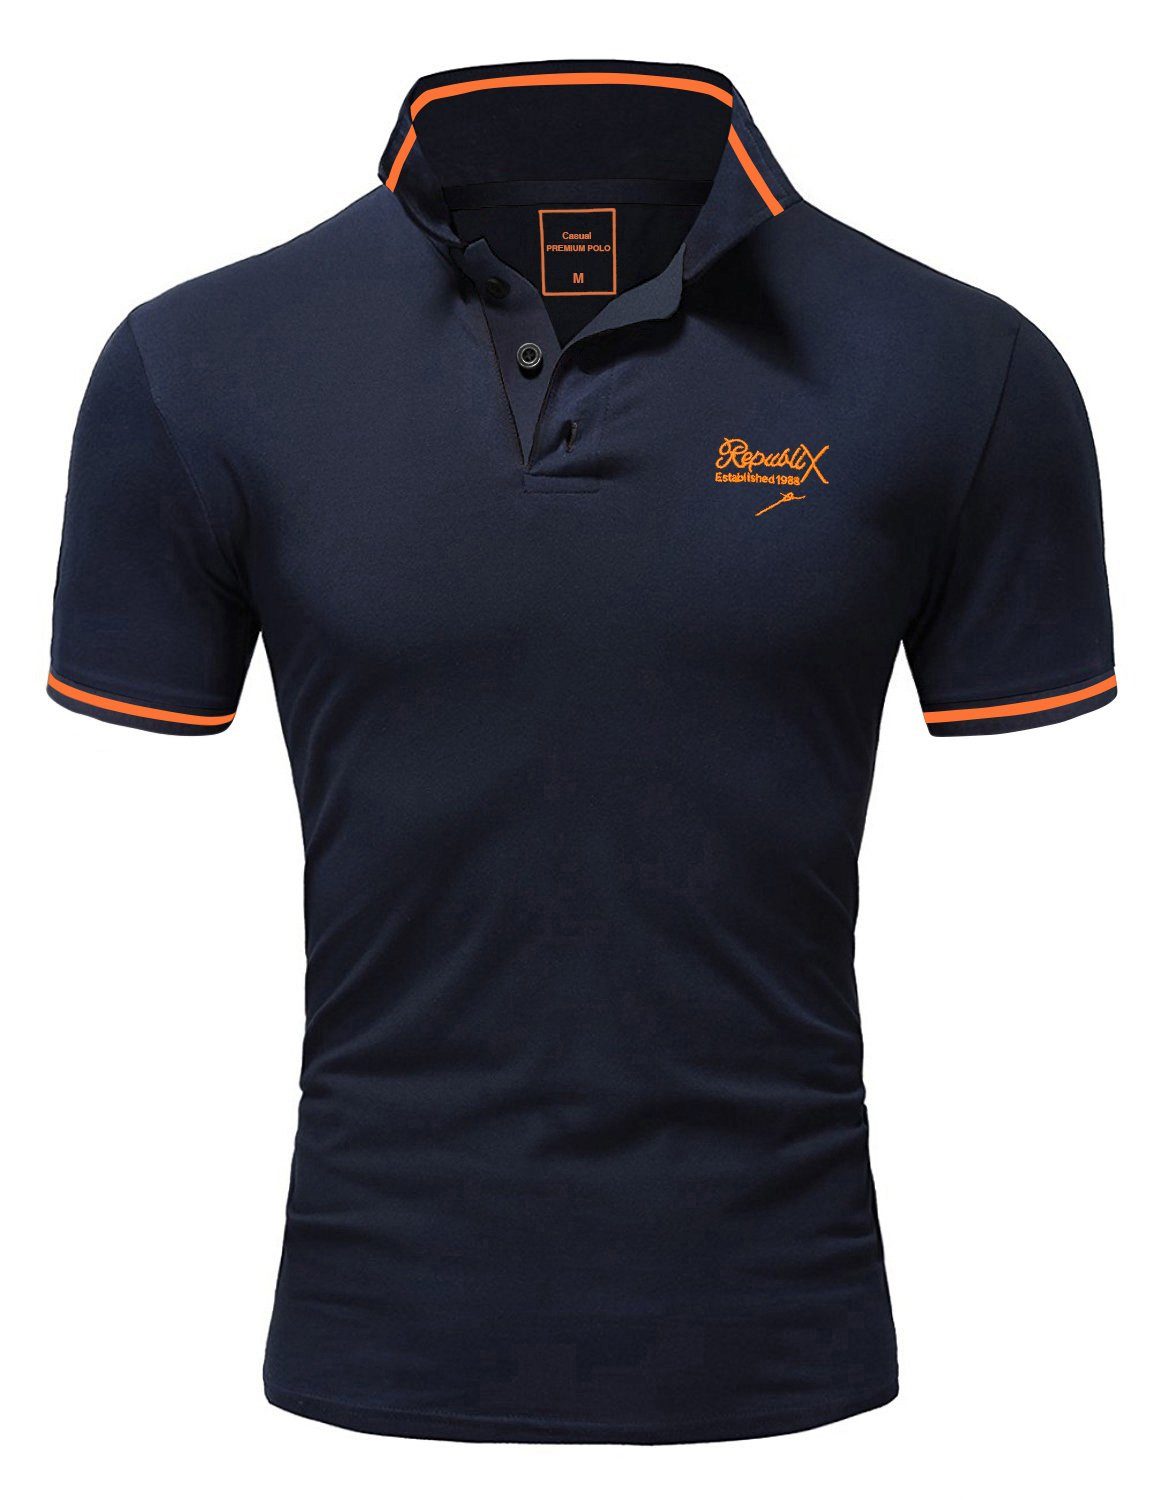 Polo GABRIEL Poloshirt Herren REPUBLIX Basic Hemd Kurzarm Kontrast Navyblau/Orange